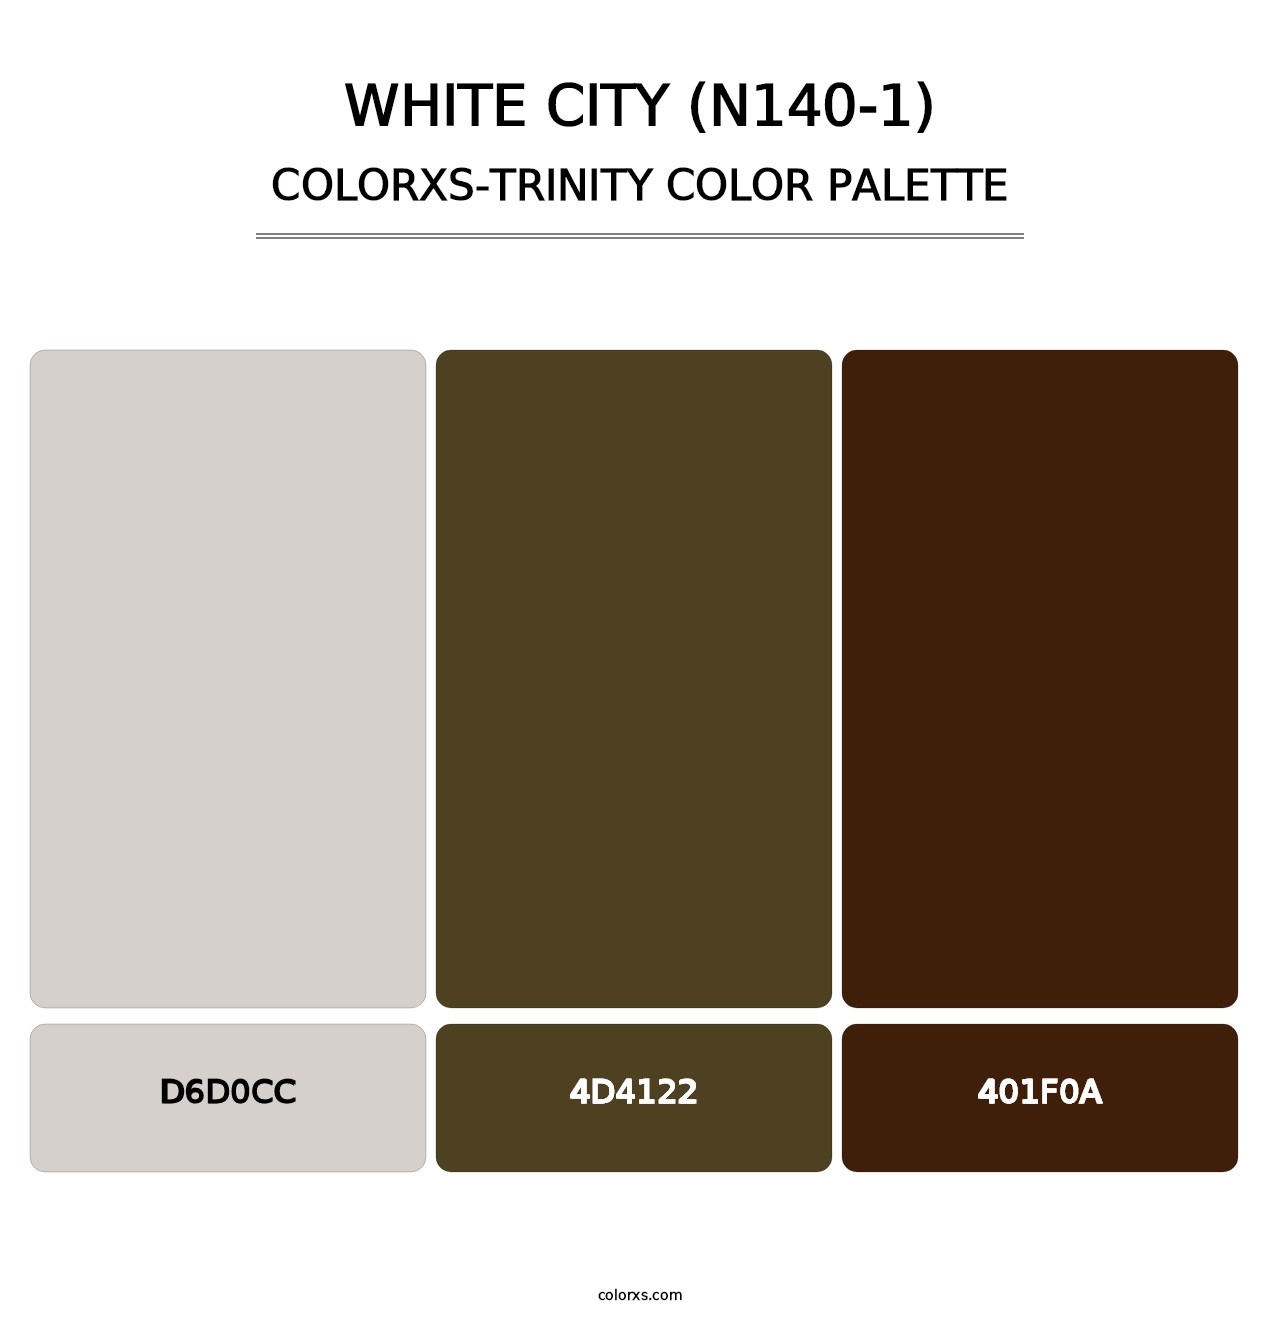 White City (N140-1) - Colorxs Trinity Palette